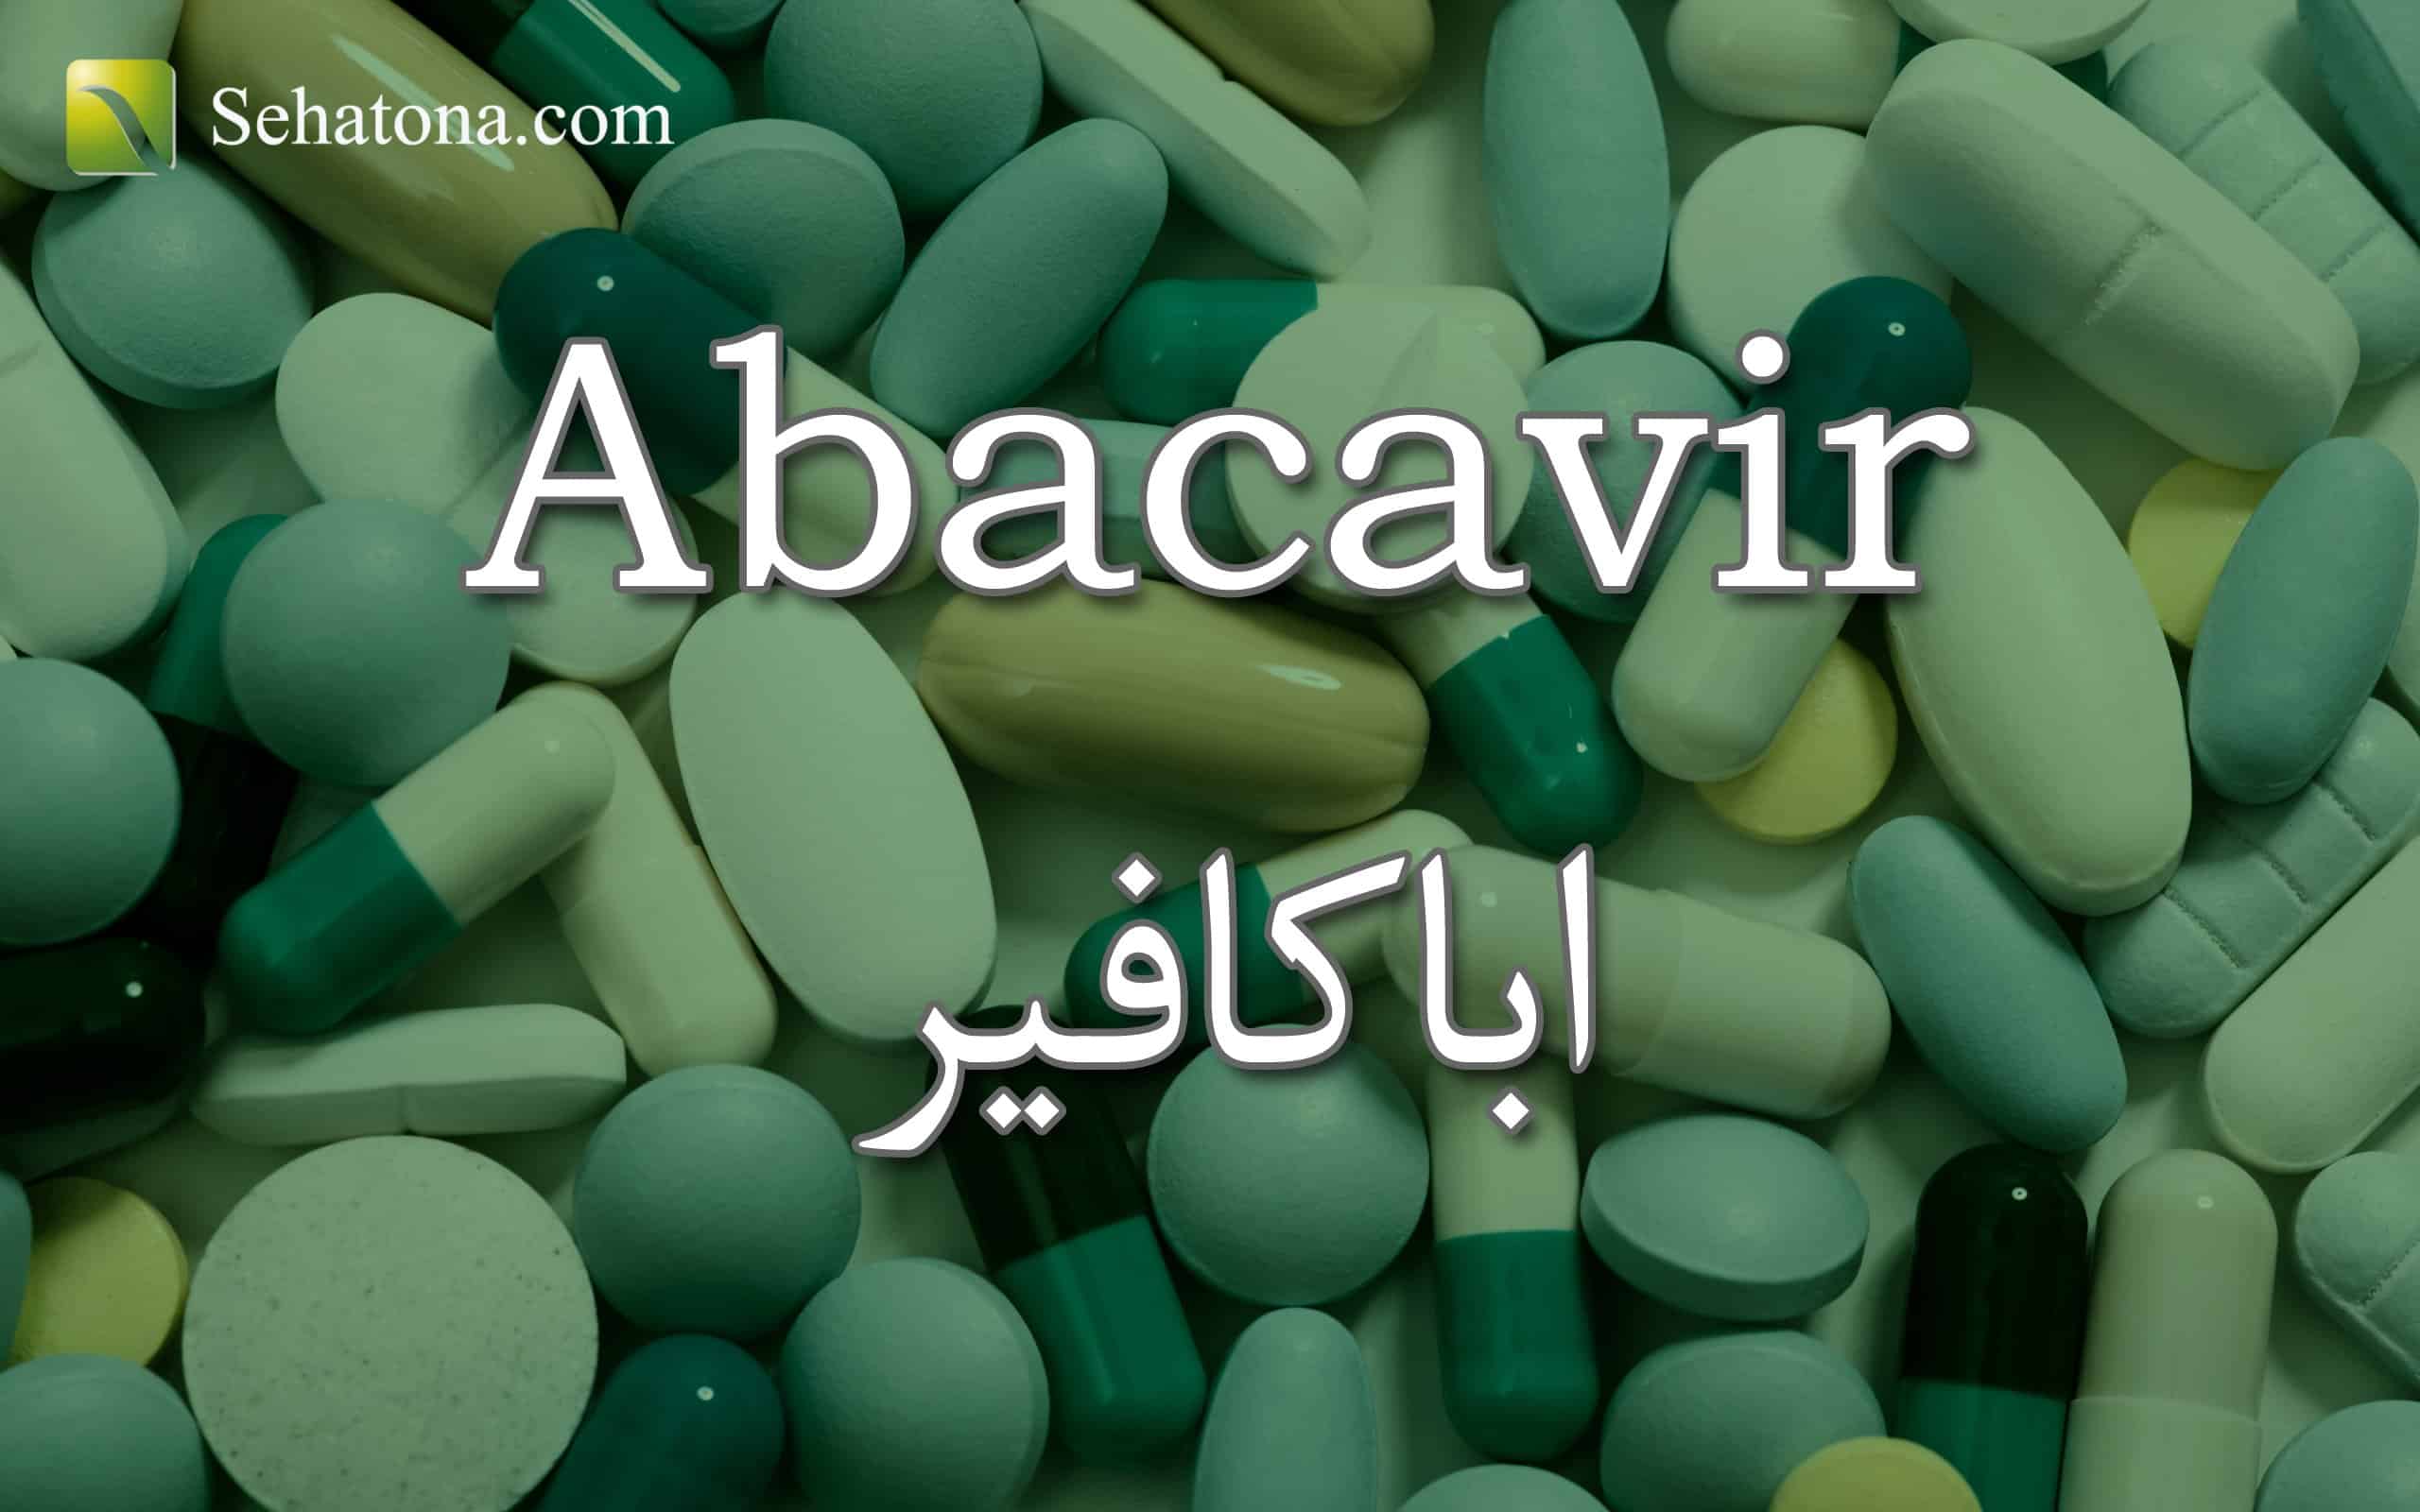 Abacavir